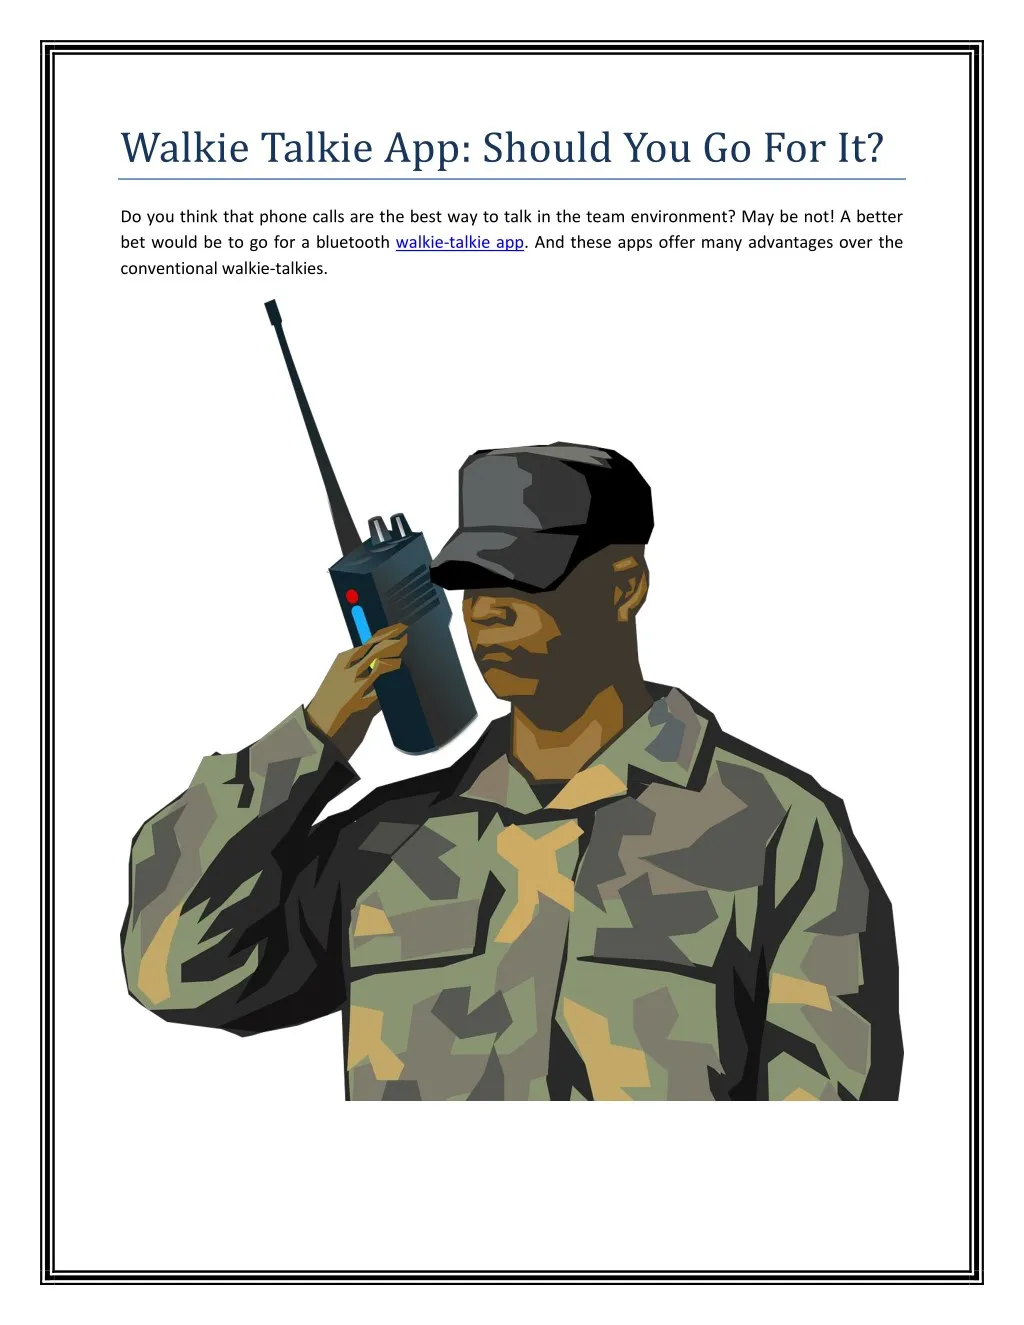 walkie talkie app should you go for it